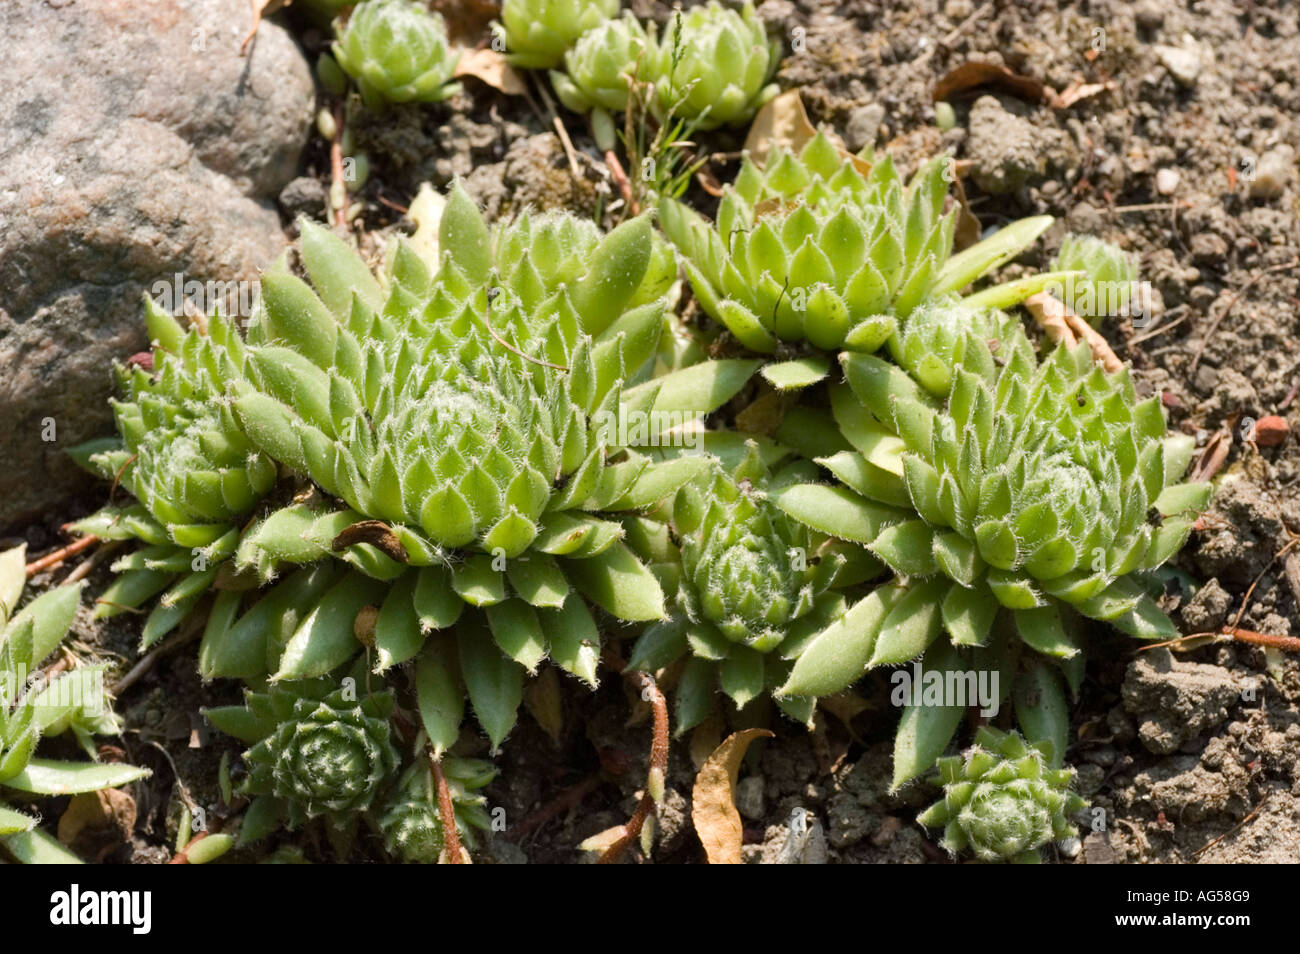 Mountain rock garden plant Crassulaceae Sempervivum angustifolium Kerner Stock Photo